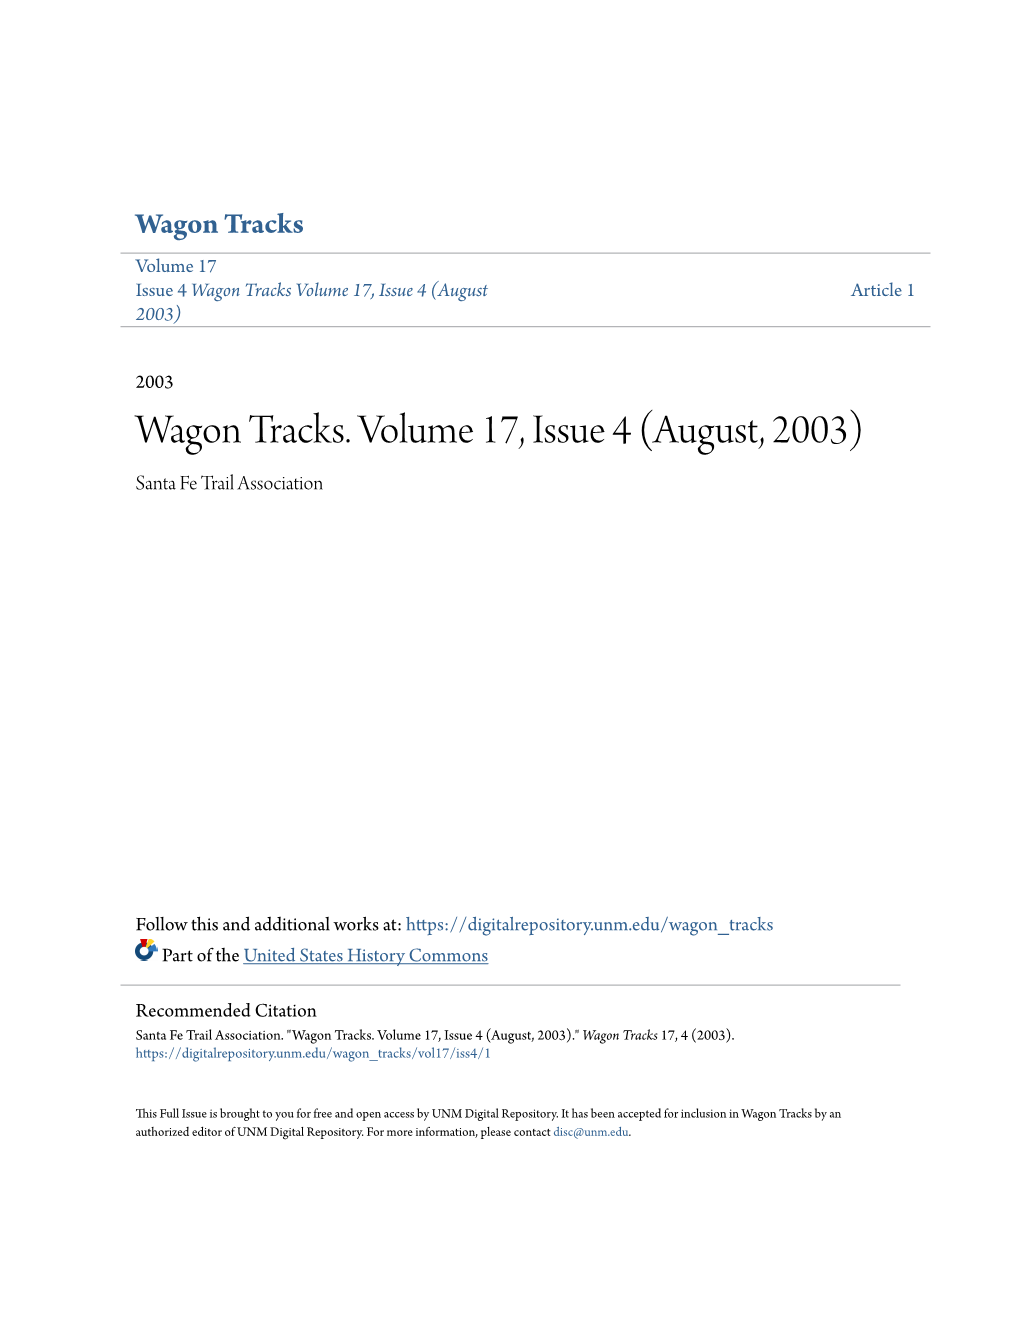 Wagon Tracks. Volume 17, Issue 4 (August, 2003) Santa Fe Trail Association